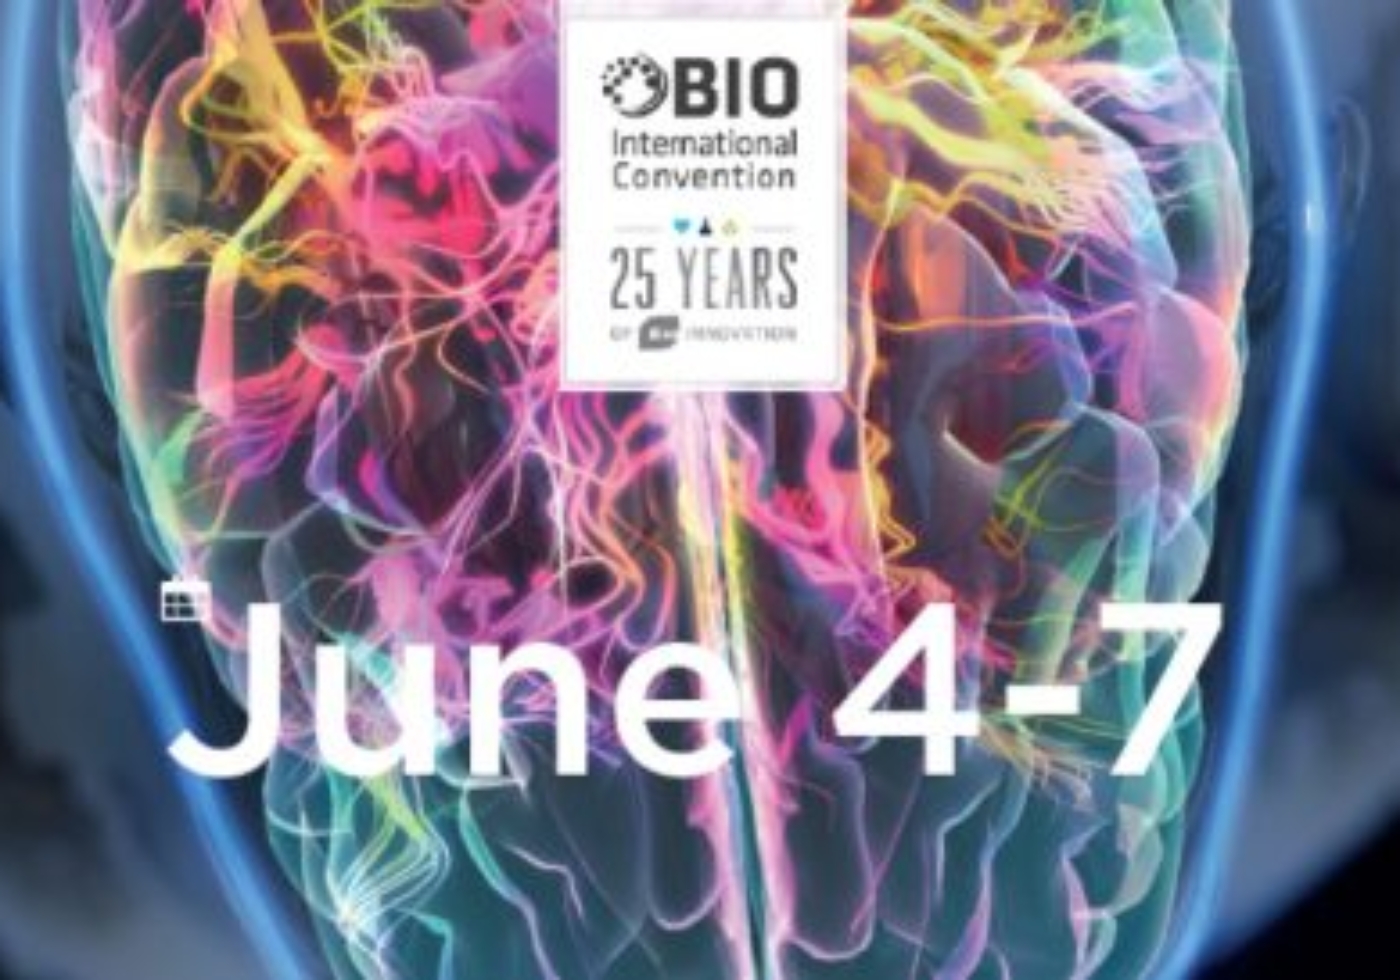 BIO International Convention poster